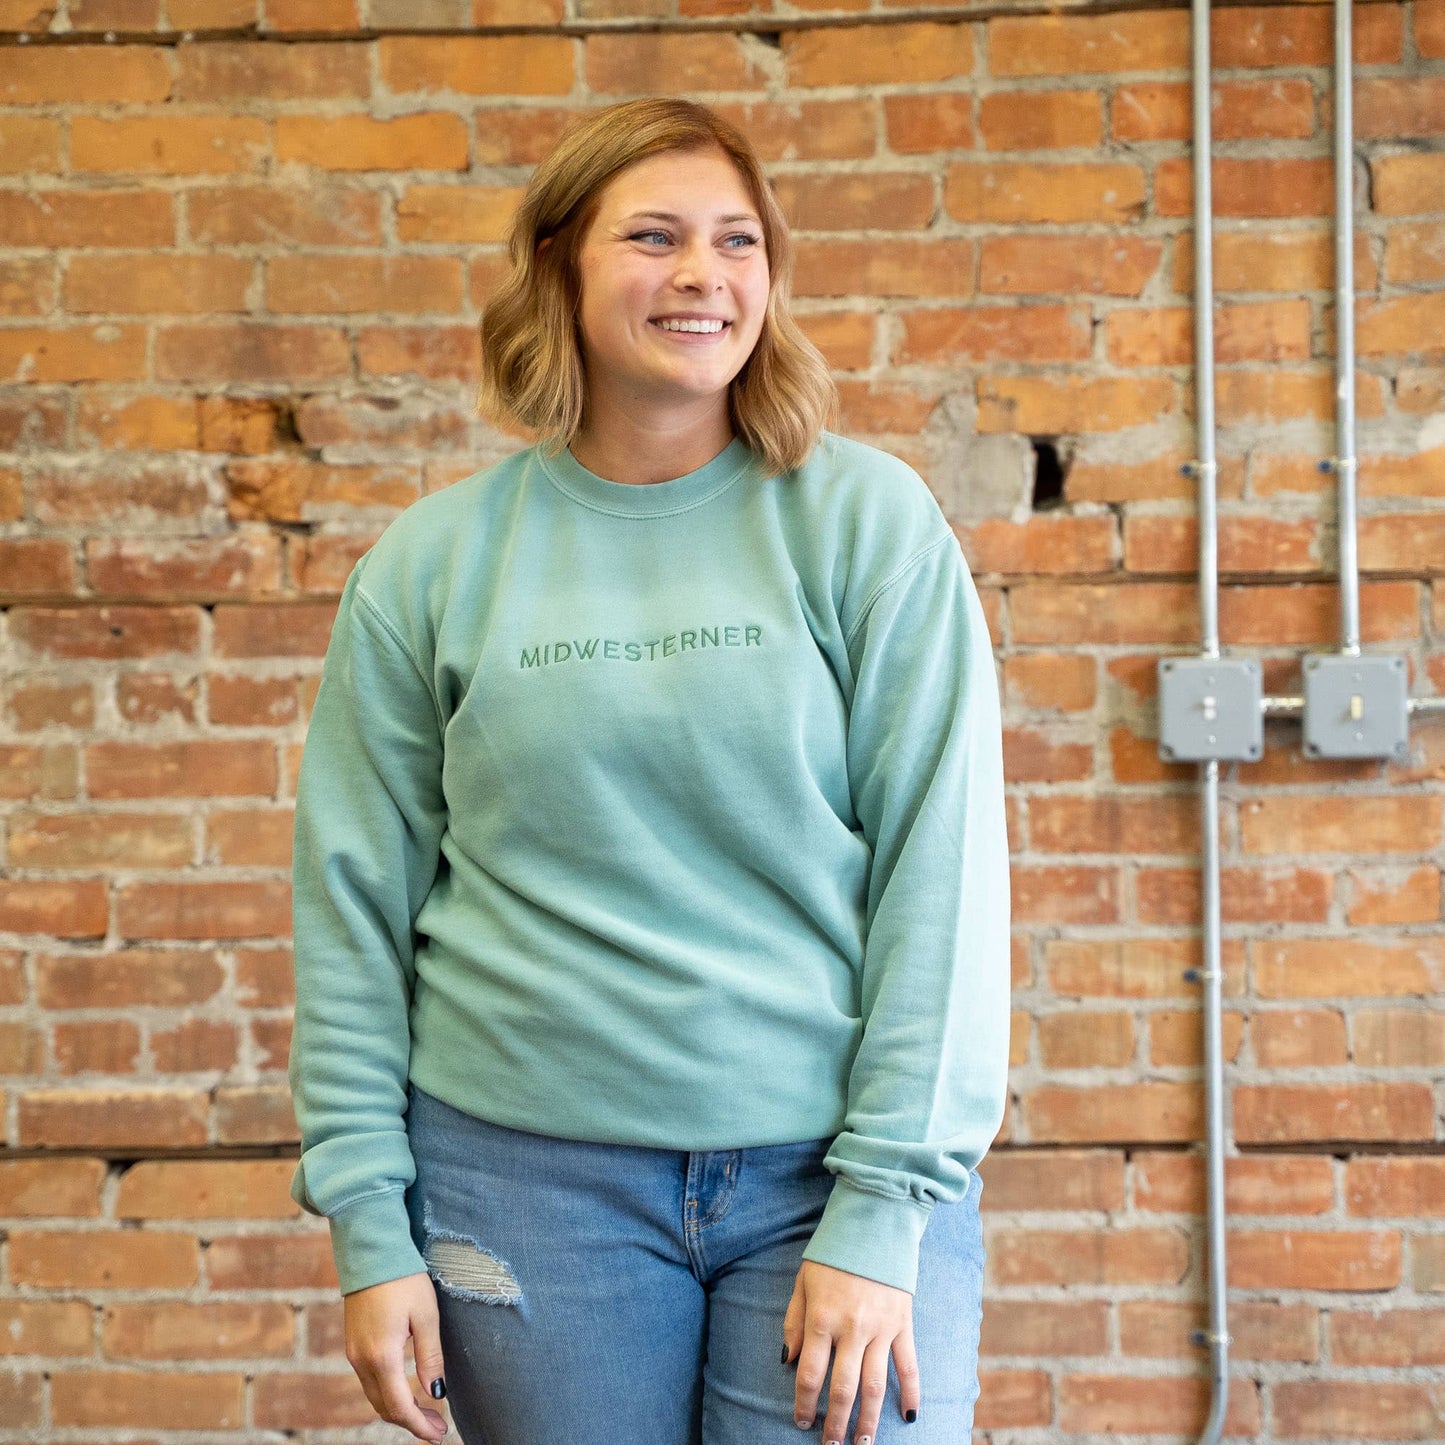 Midwesterner Embroidered Sweatshirt